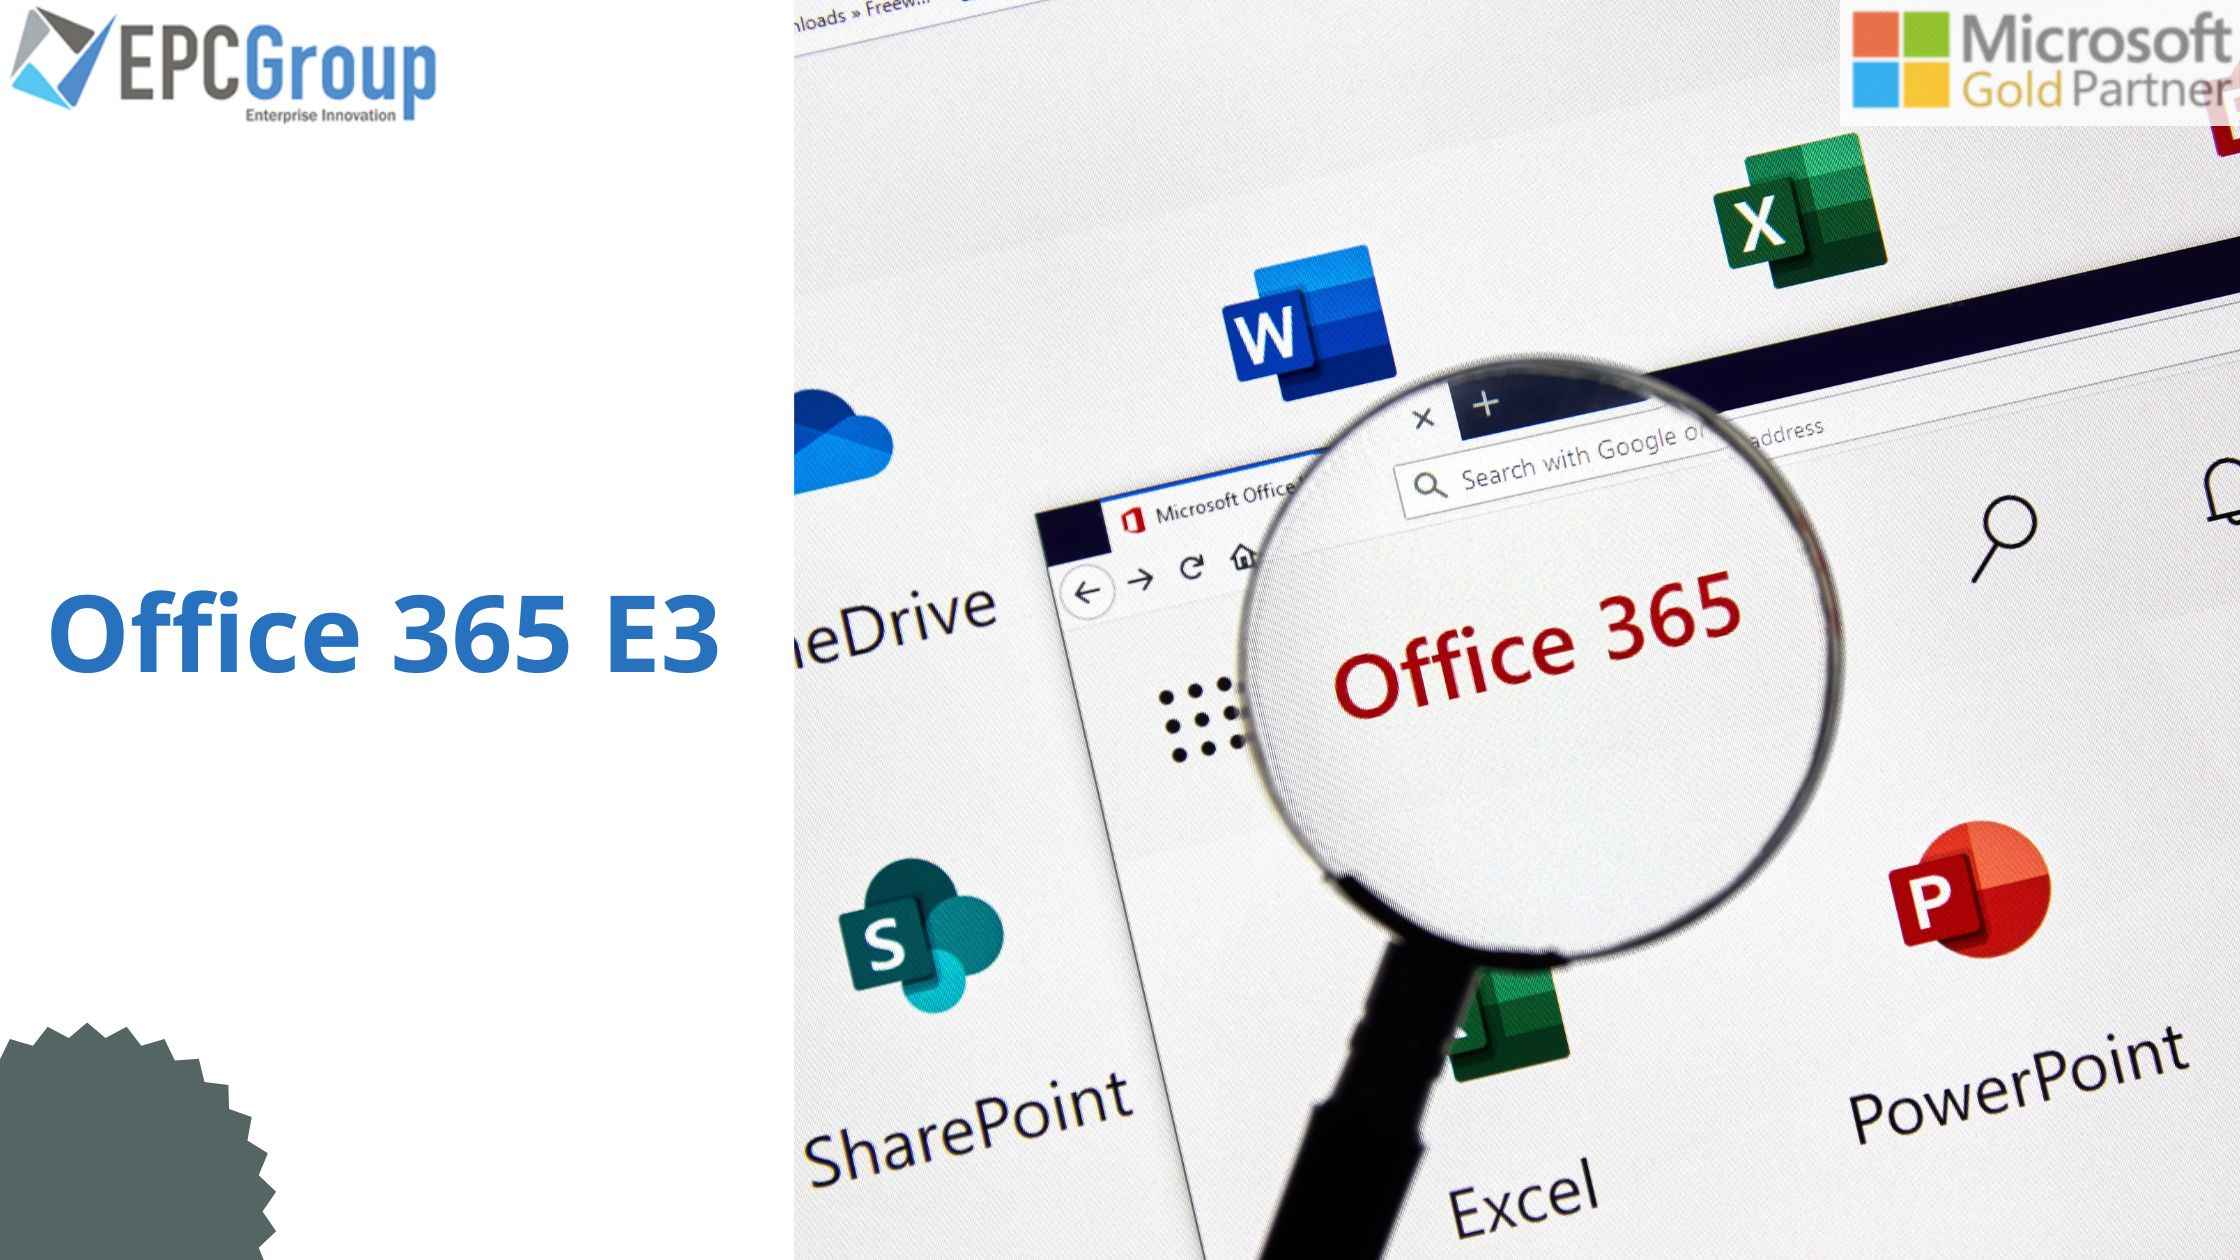 Office 365 E3: Microsoft’s Cloud-Based Suite - thumb image